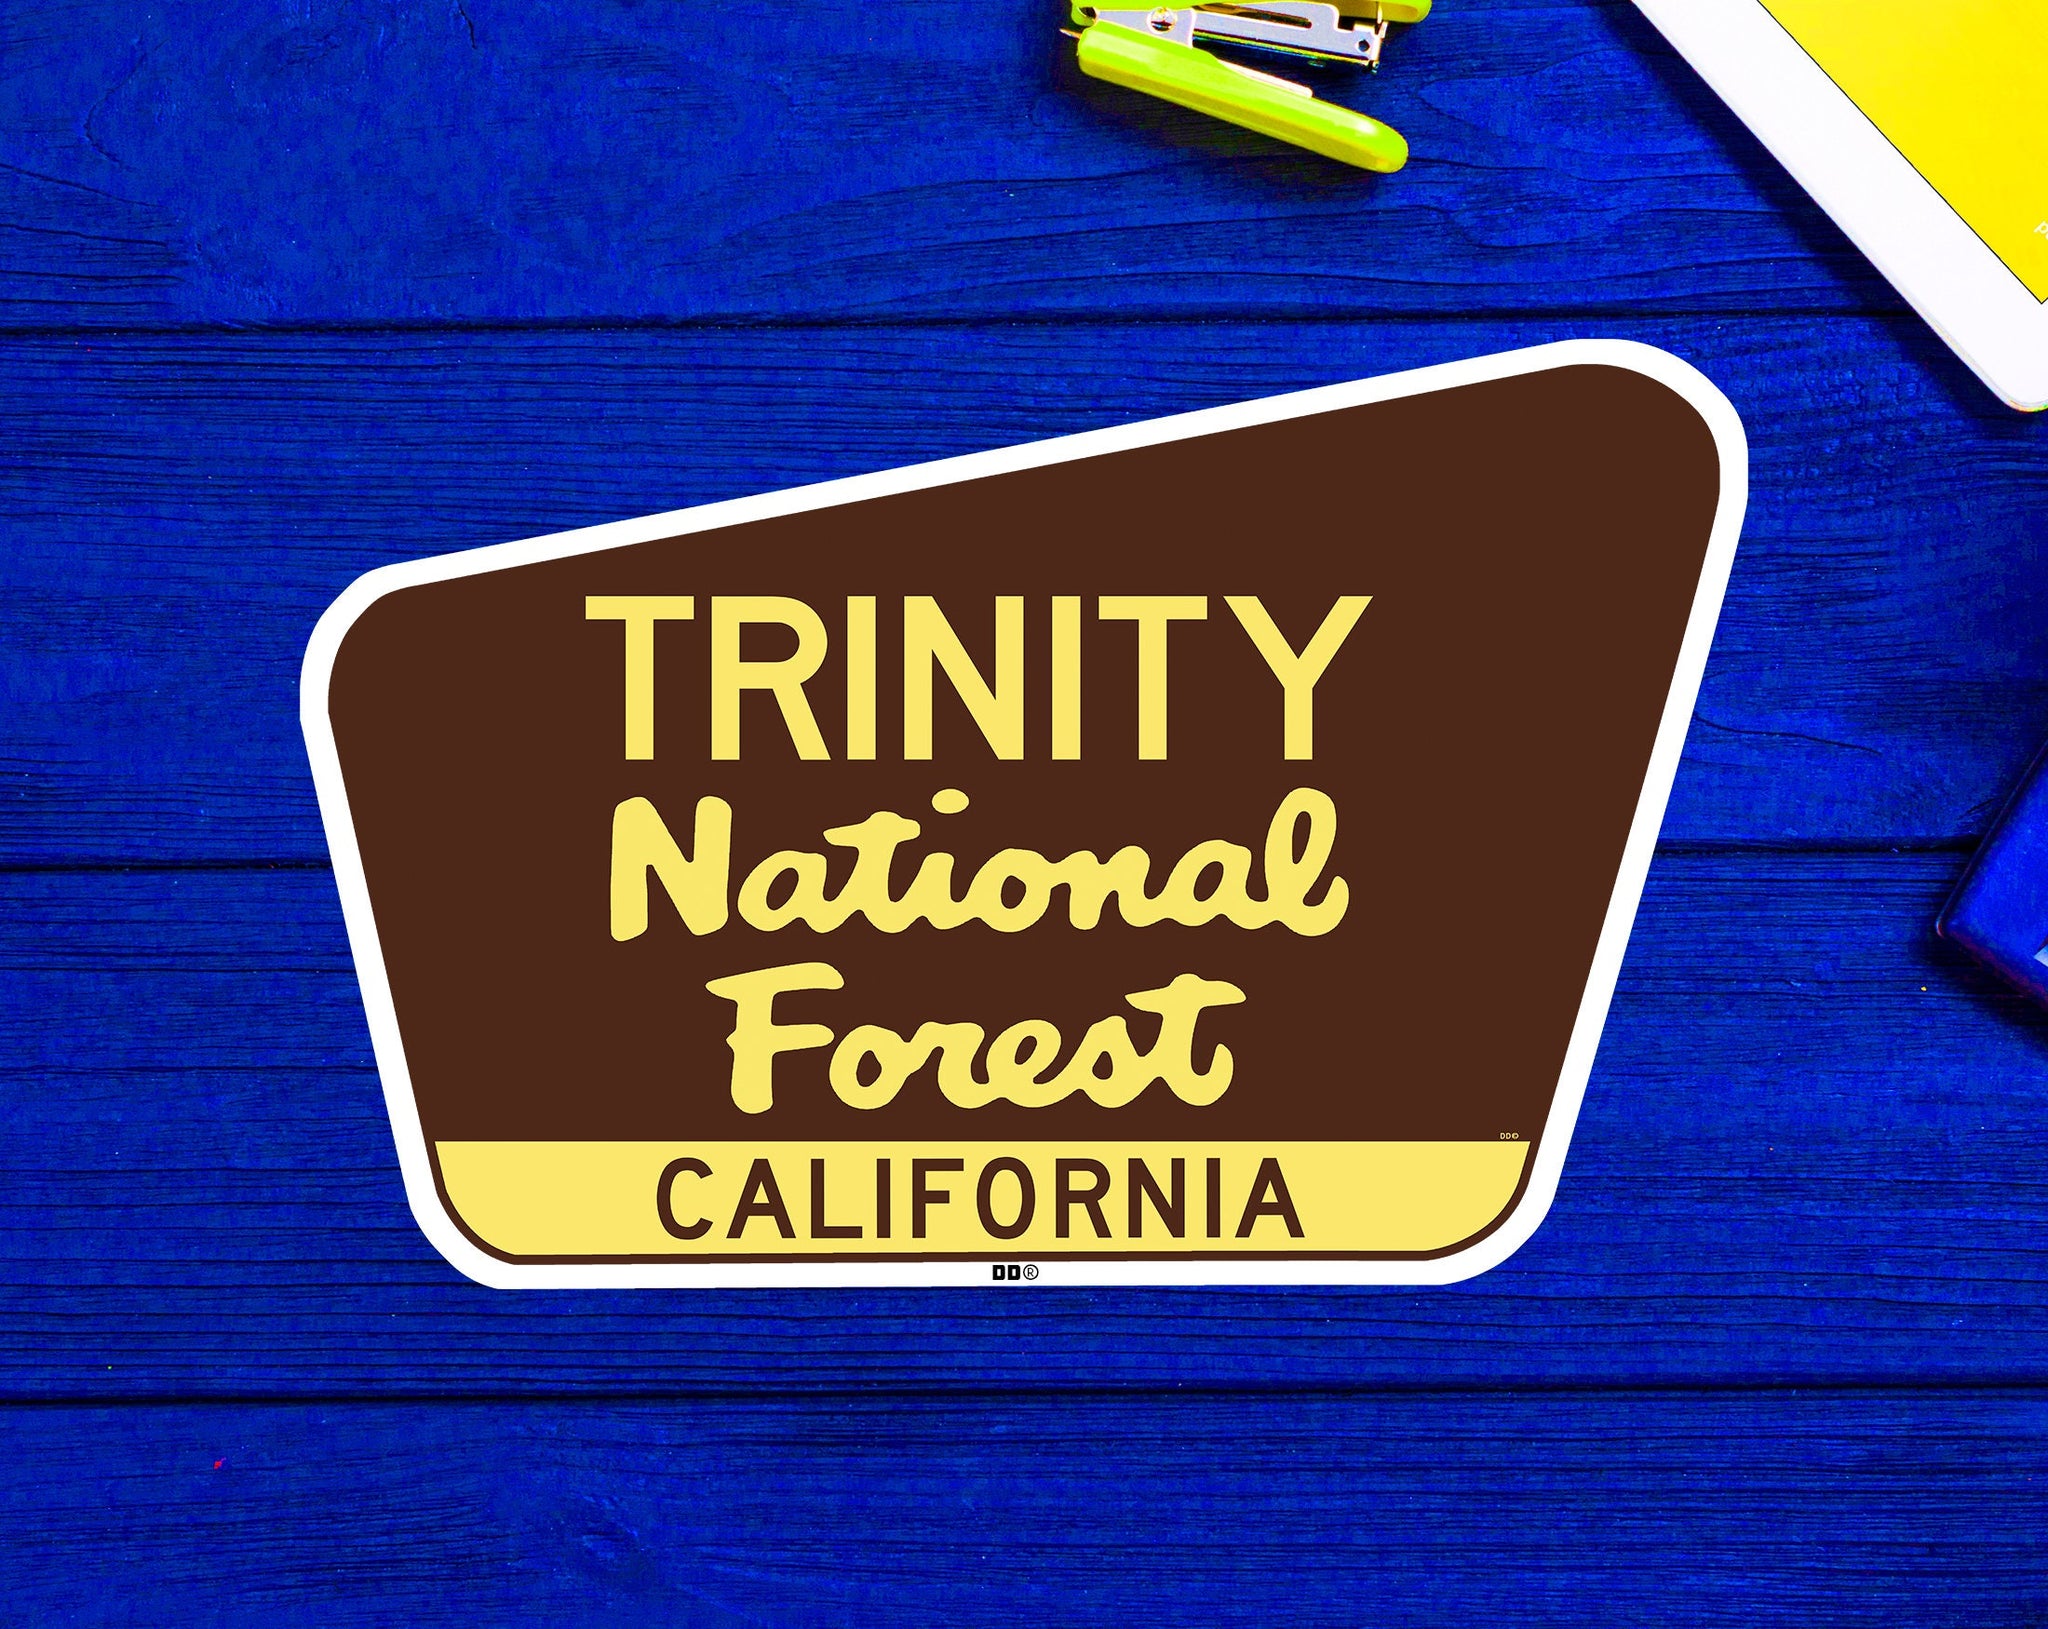 Trinity National Forest California Decal Sticker 3.75" x 2.5" Vinyl